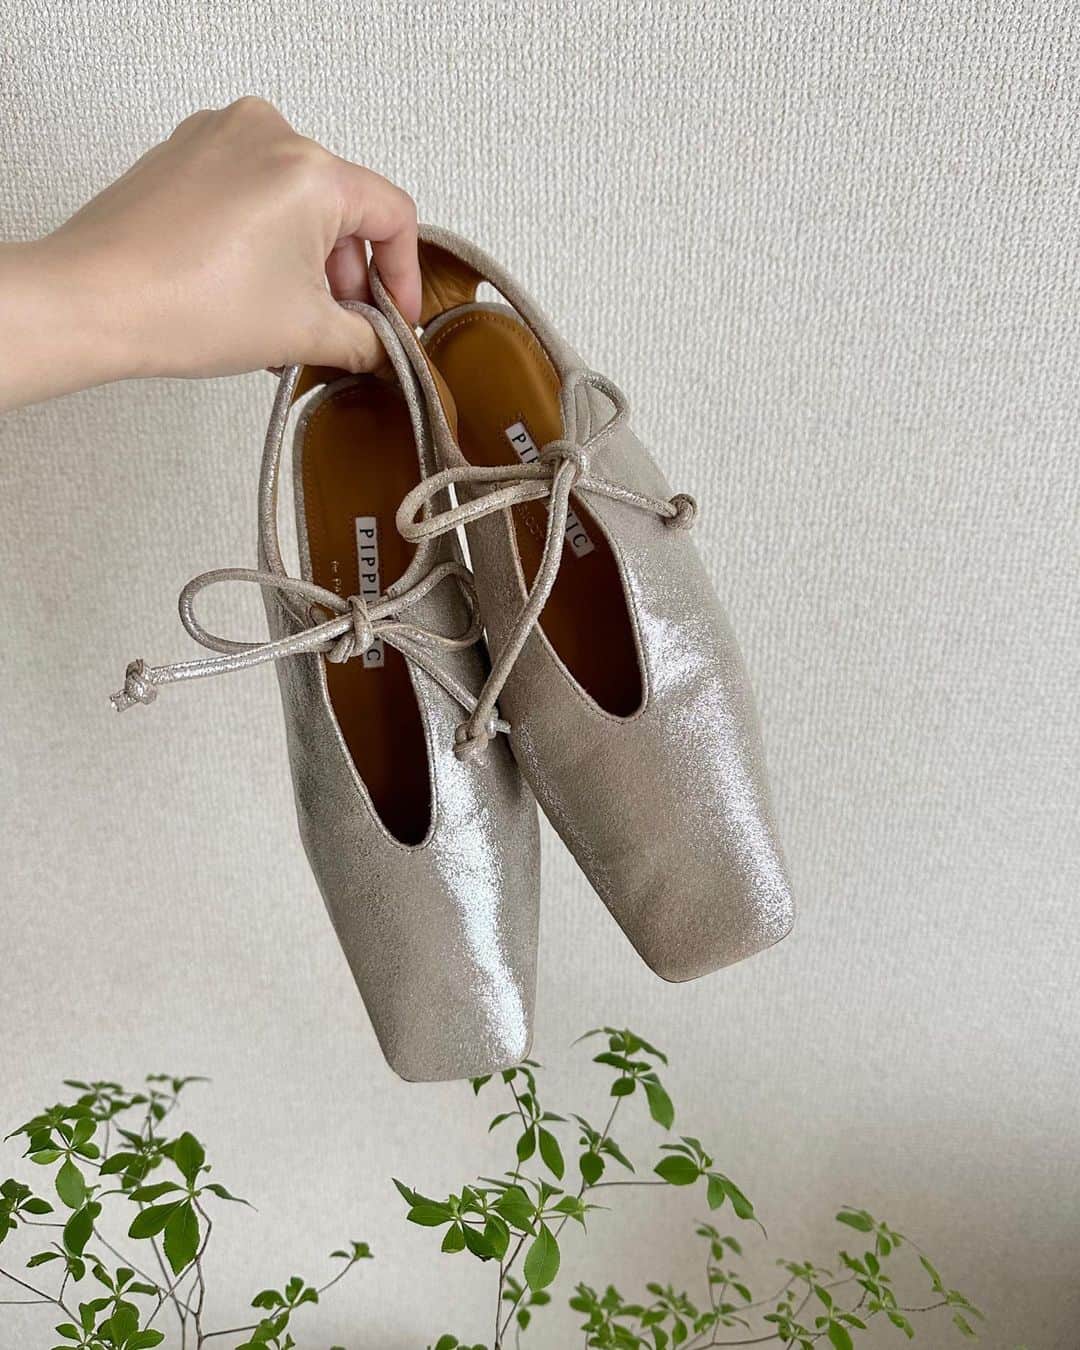 miho uesugiのインスタグラム：「素敵な靴は、素敵な場所に連れて行ってくれるということで… @pippichic_official の靴を購入。 ㅤㅤㅤㅤㅤㅤㅤㅤㅤㅤㅤㅤㅤ3ヶ月待ってた…！！ ㅤㅤㅤㅤㅤㅤㅤㅤㅤㅤㅤㅤㅤ足元が綺麗だと元気が出ます☺️  そして去年2色買ったKastaneのお気に入りのワンピースを着た今日のコーディネート🤳  ㅤㅤㅤㅤㅤㅤㅤㅤㅤㅤㅤㅤㅤ  ㅤㅤㅤㅤㅤㅤㅤㅤㅤㅤㅤㅤㅤ #pippichic#靴#パンプス#ラメ#足元#足元倶楽部#足元コーデ#Kastane#Kastane舞浜#Kastane_ootd#骨格ウェーブ#イエベ春#コーディネート#今日のコーデ#コーデ#大人カジュアル#カジュアル#ロングヘア#オン眉#ぱっつん前髪#30代ファッション#30代コーデ#カスタネ#低身長#低身長コーデ#夏#夏コーデ#カジュアルコーデ#休日#休日の過ごし方」